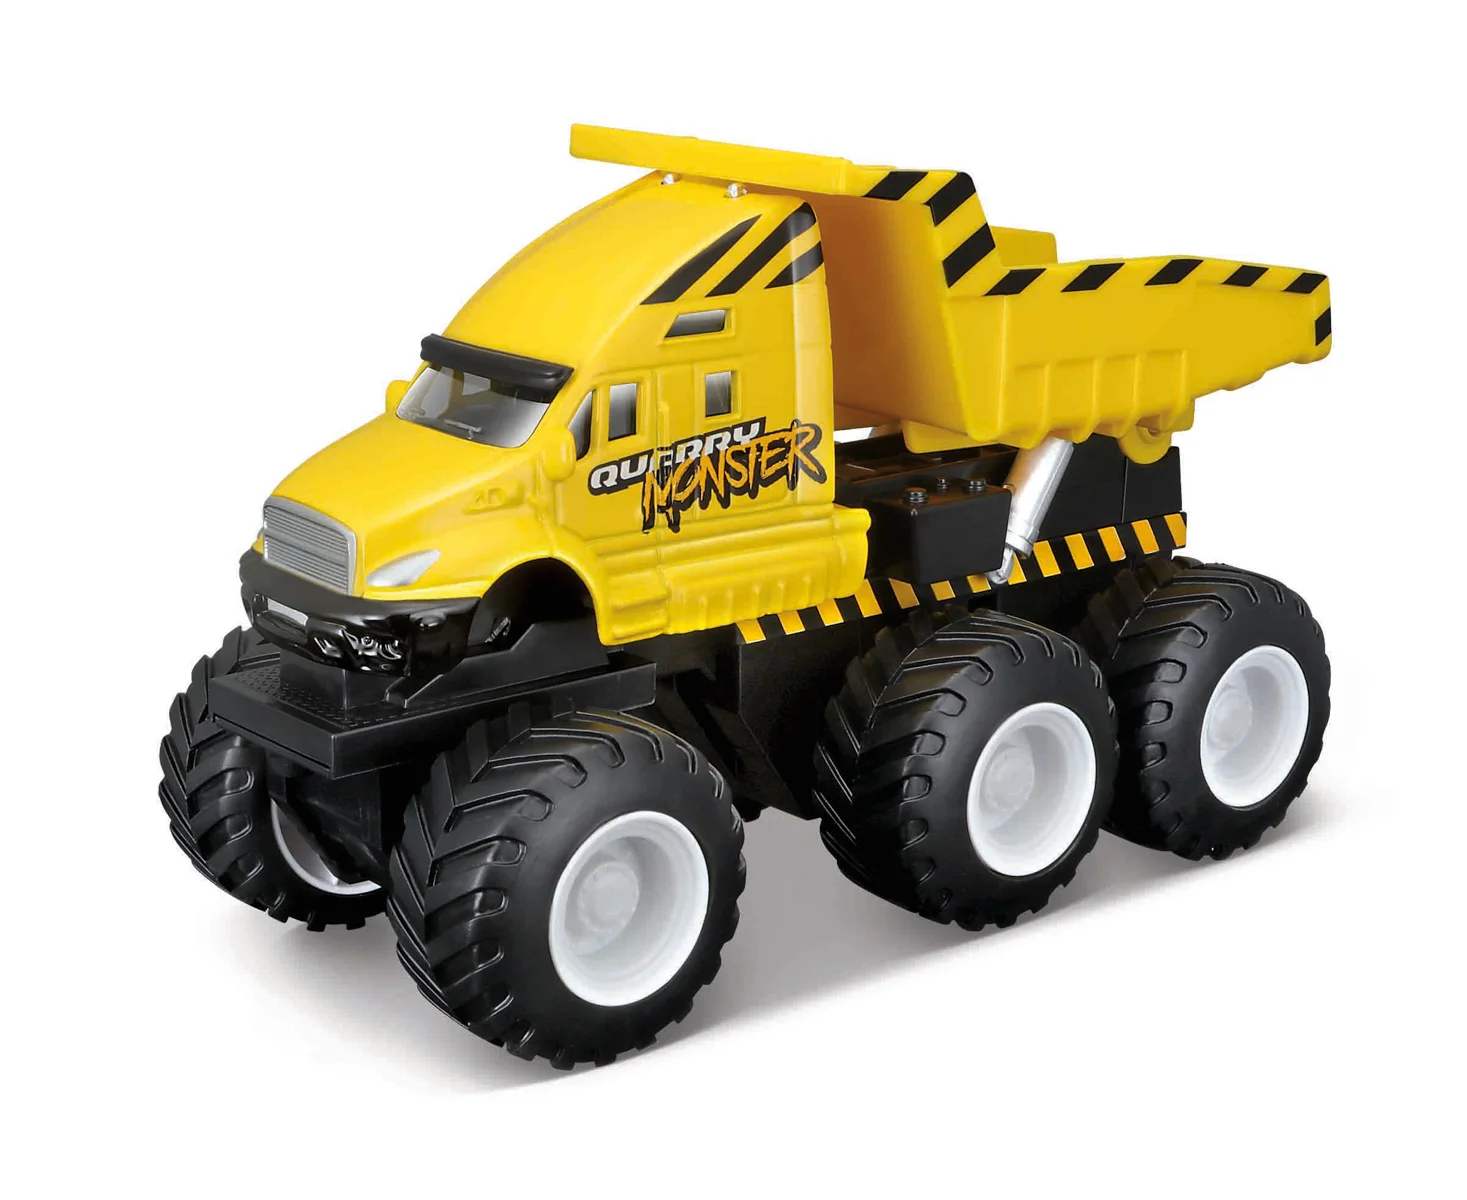 Maisto - Builder Zone Quarry monsters, užitkové vozy, sklápěcí vůz